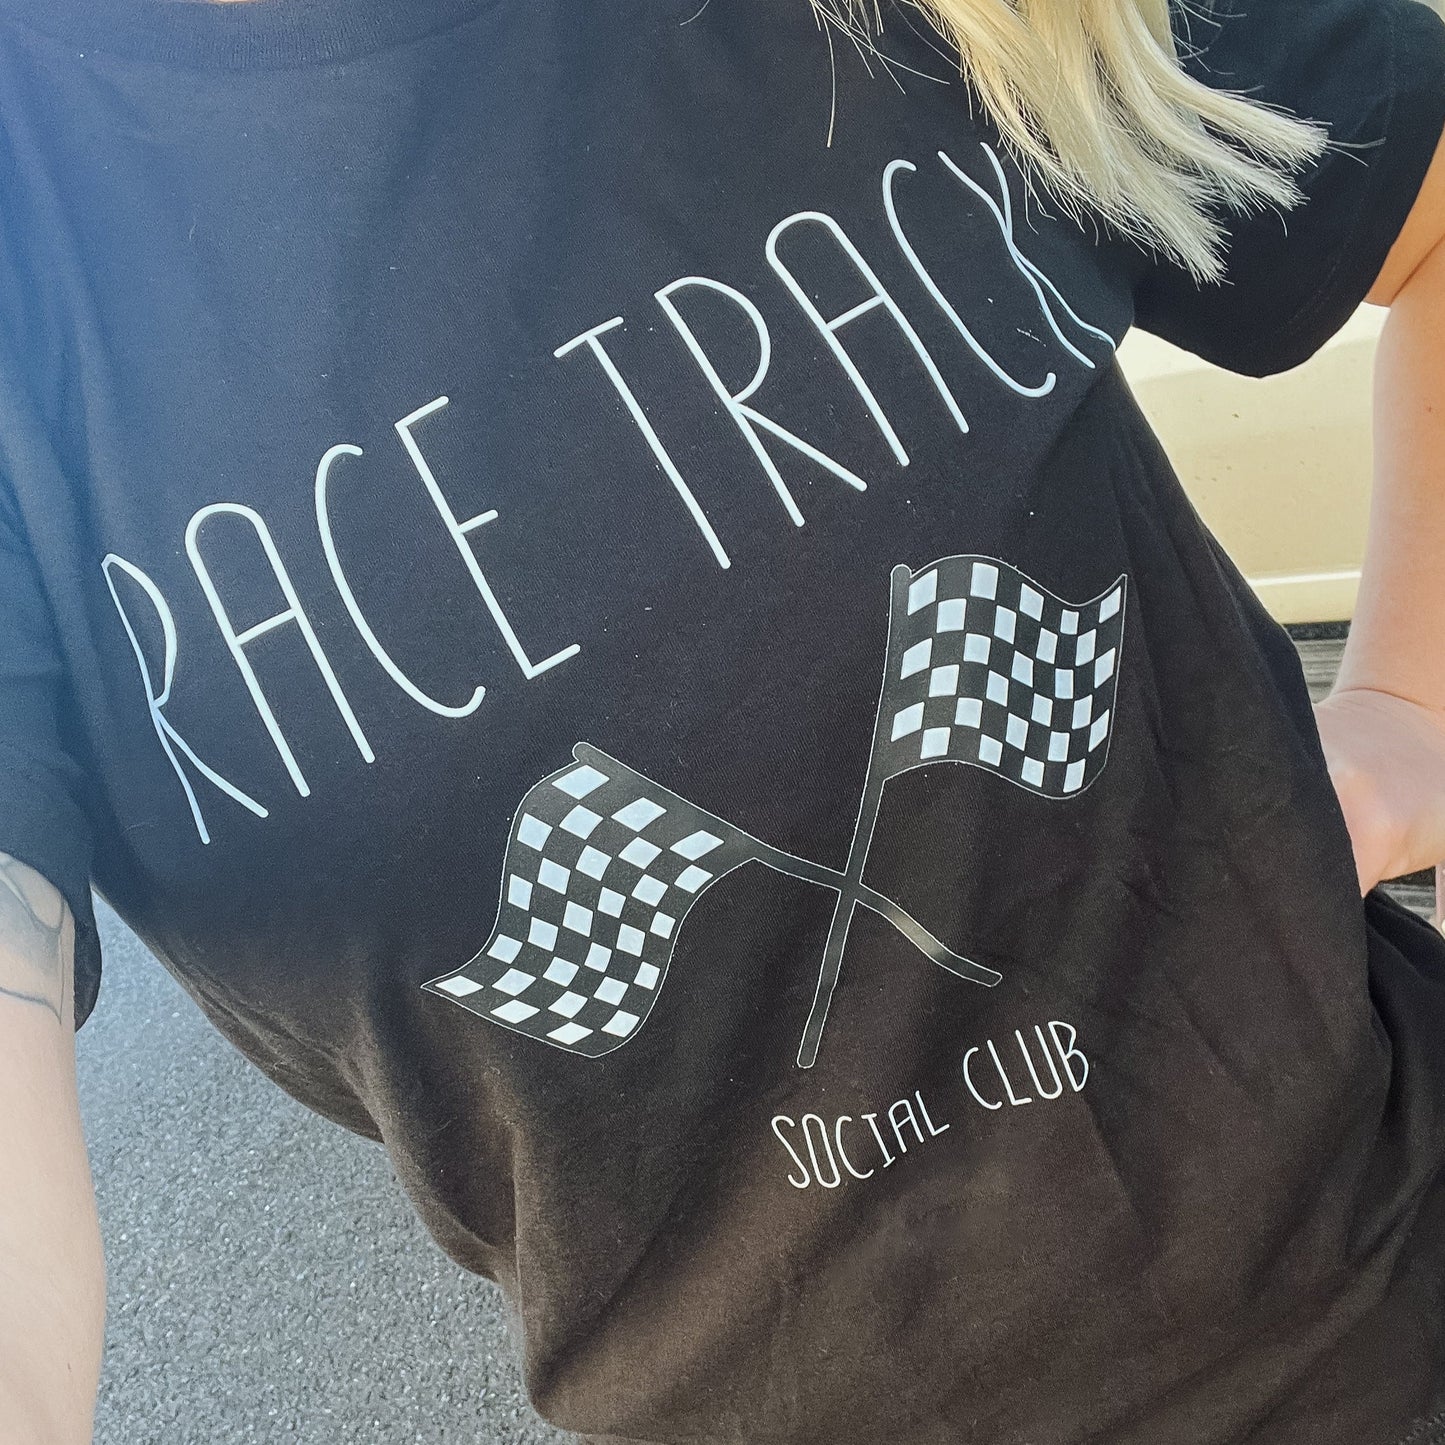 Race Track Social Club